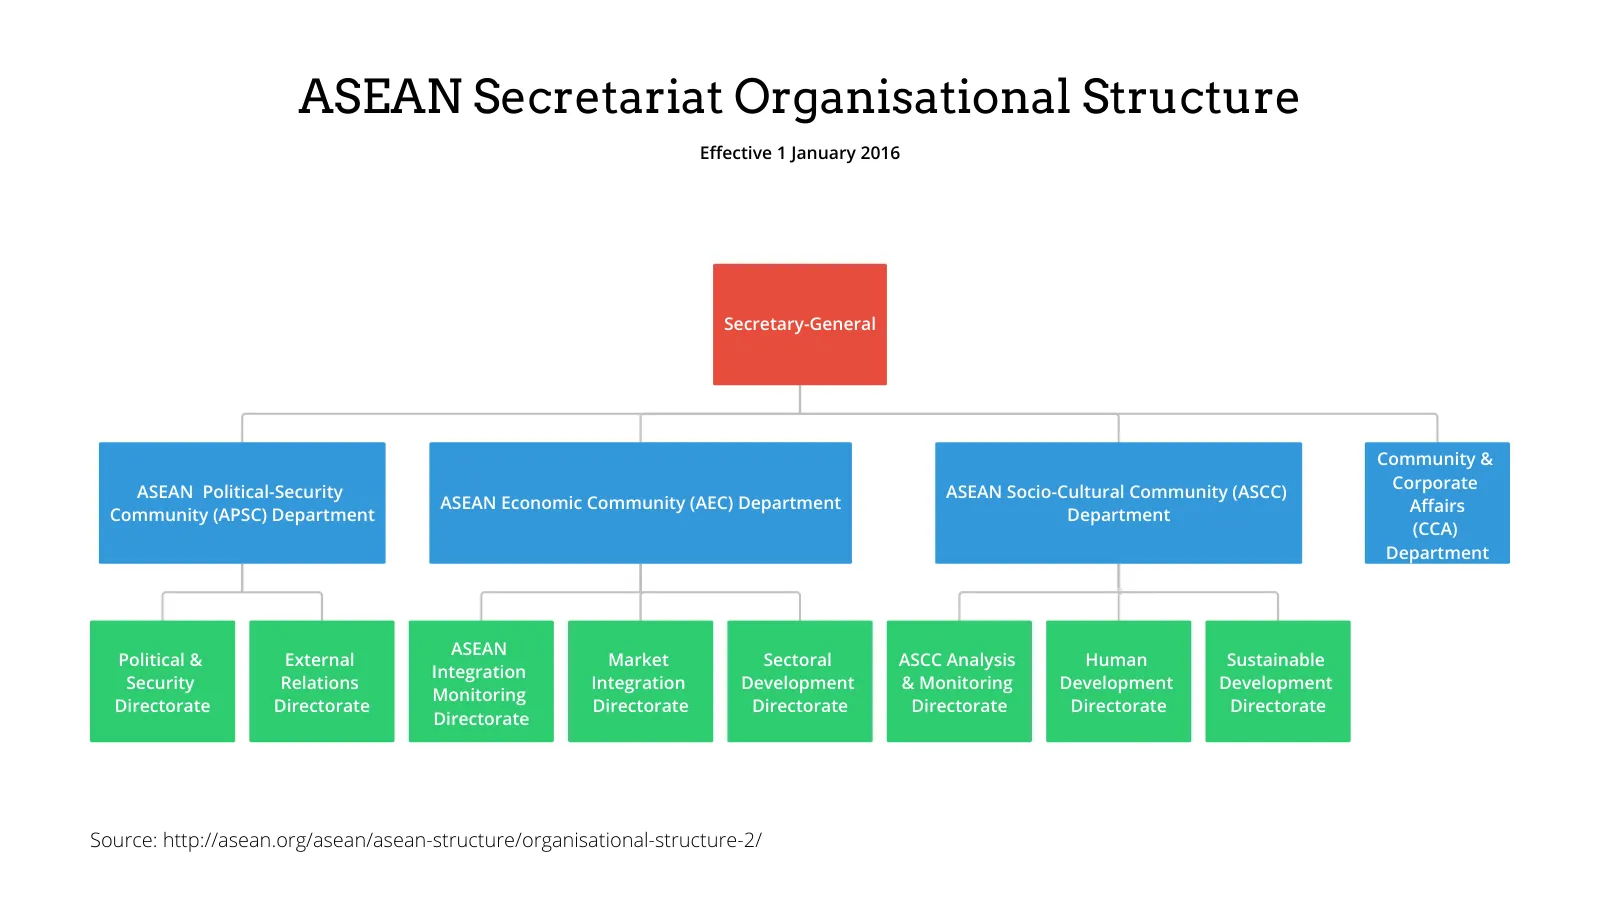 Organizational Chart example: ASEAN Secretariat Organisational Structure